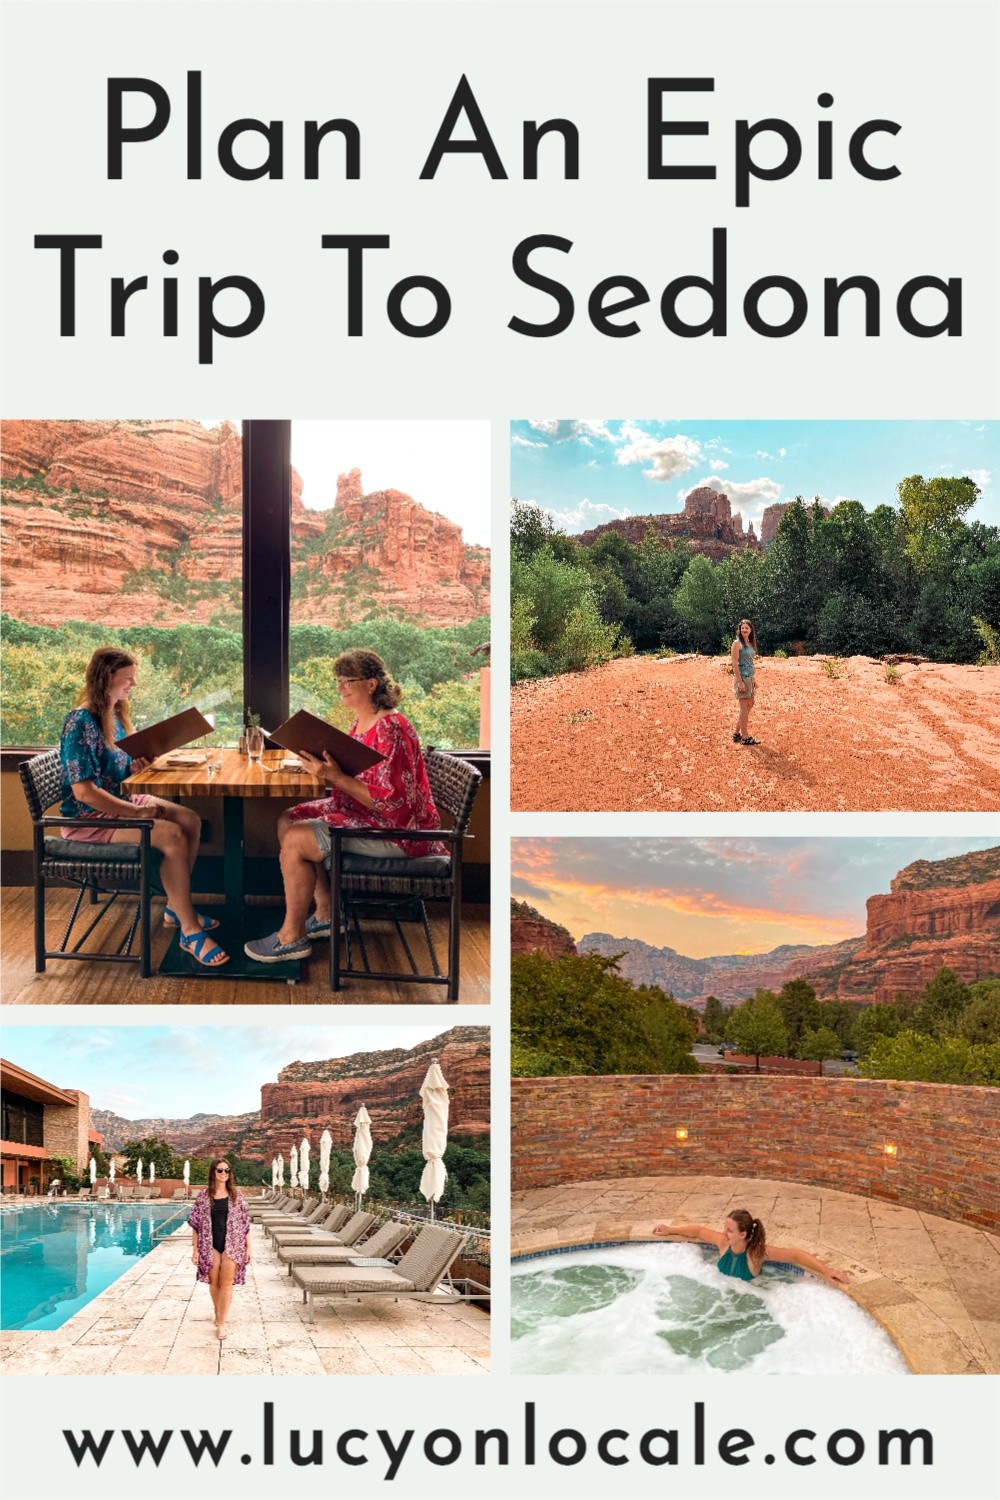 Plan a trip to Sedona